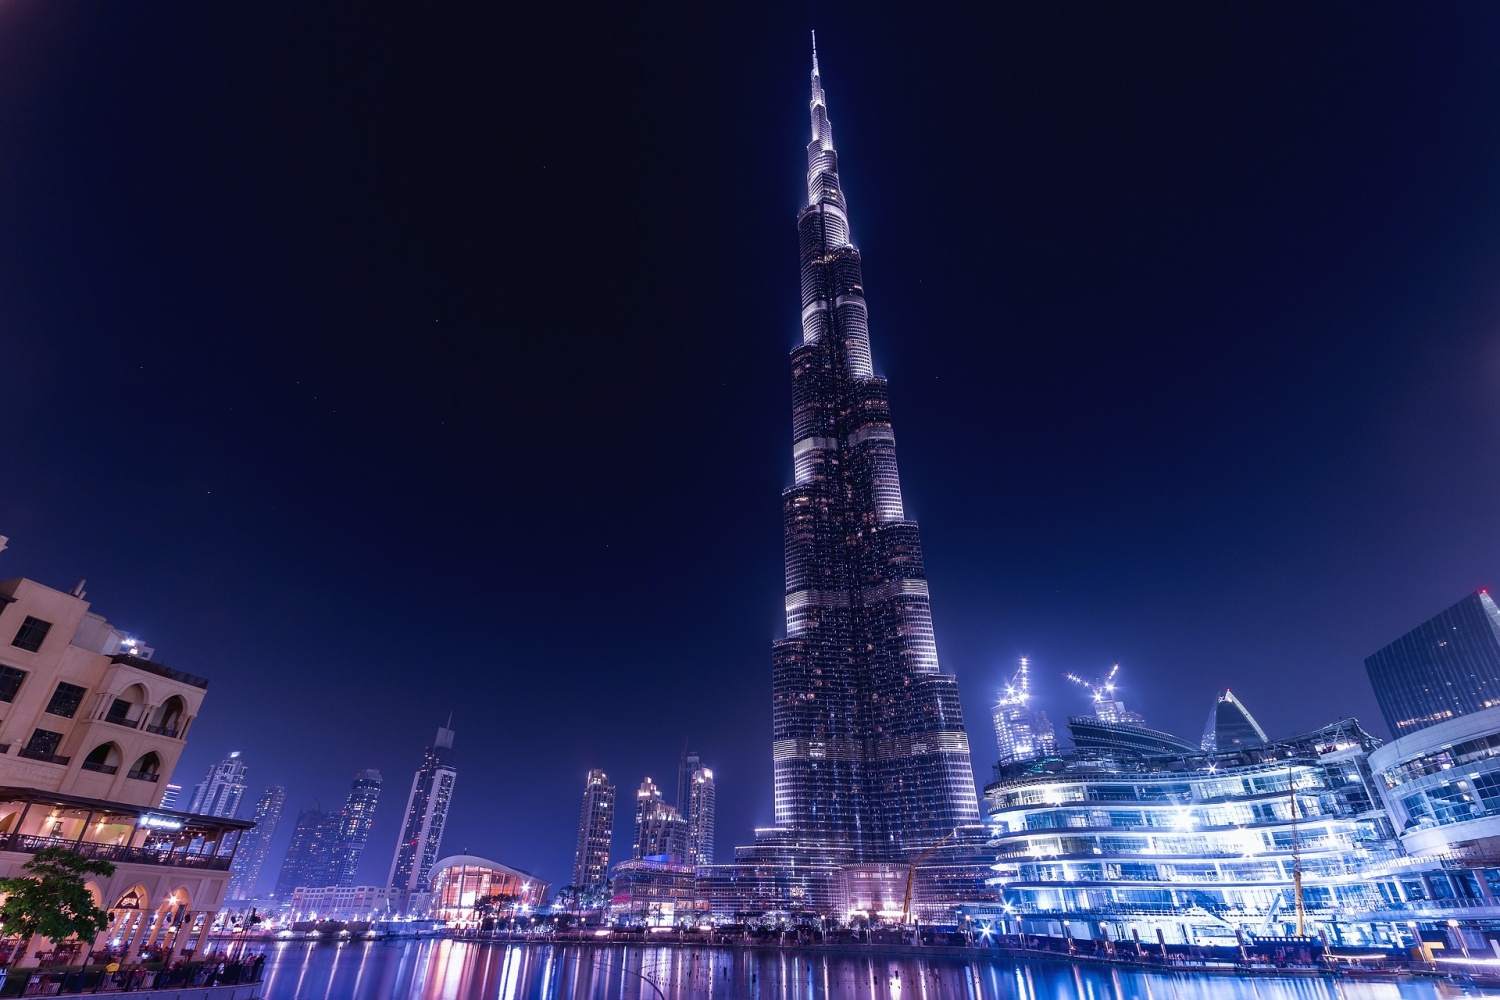 Dubai’s Expo spurs tourism, boosting UAE business activity